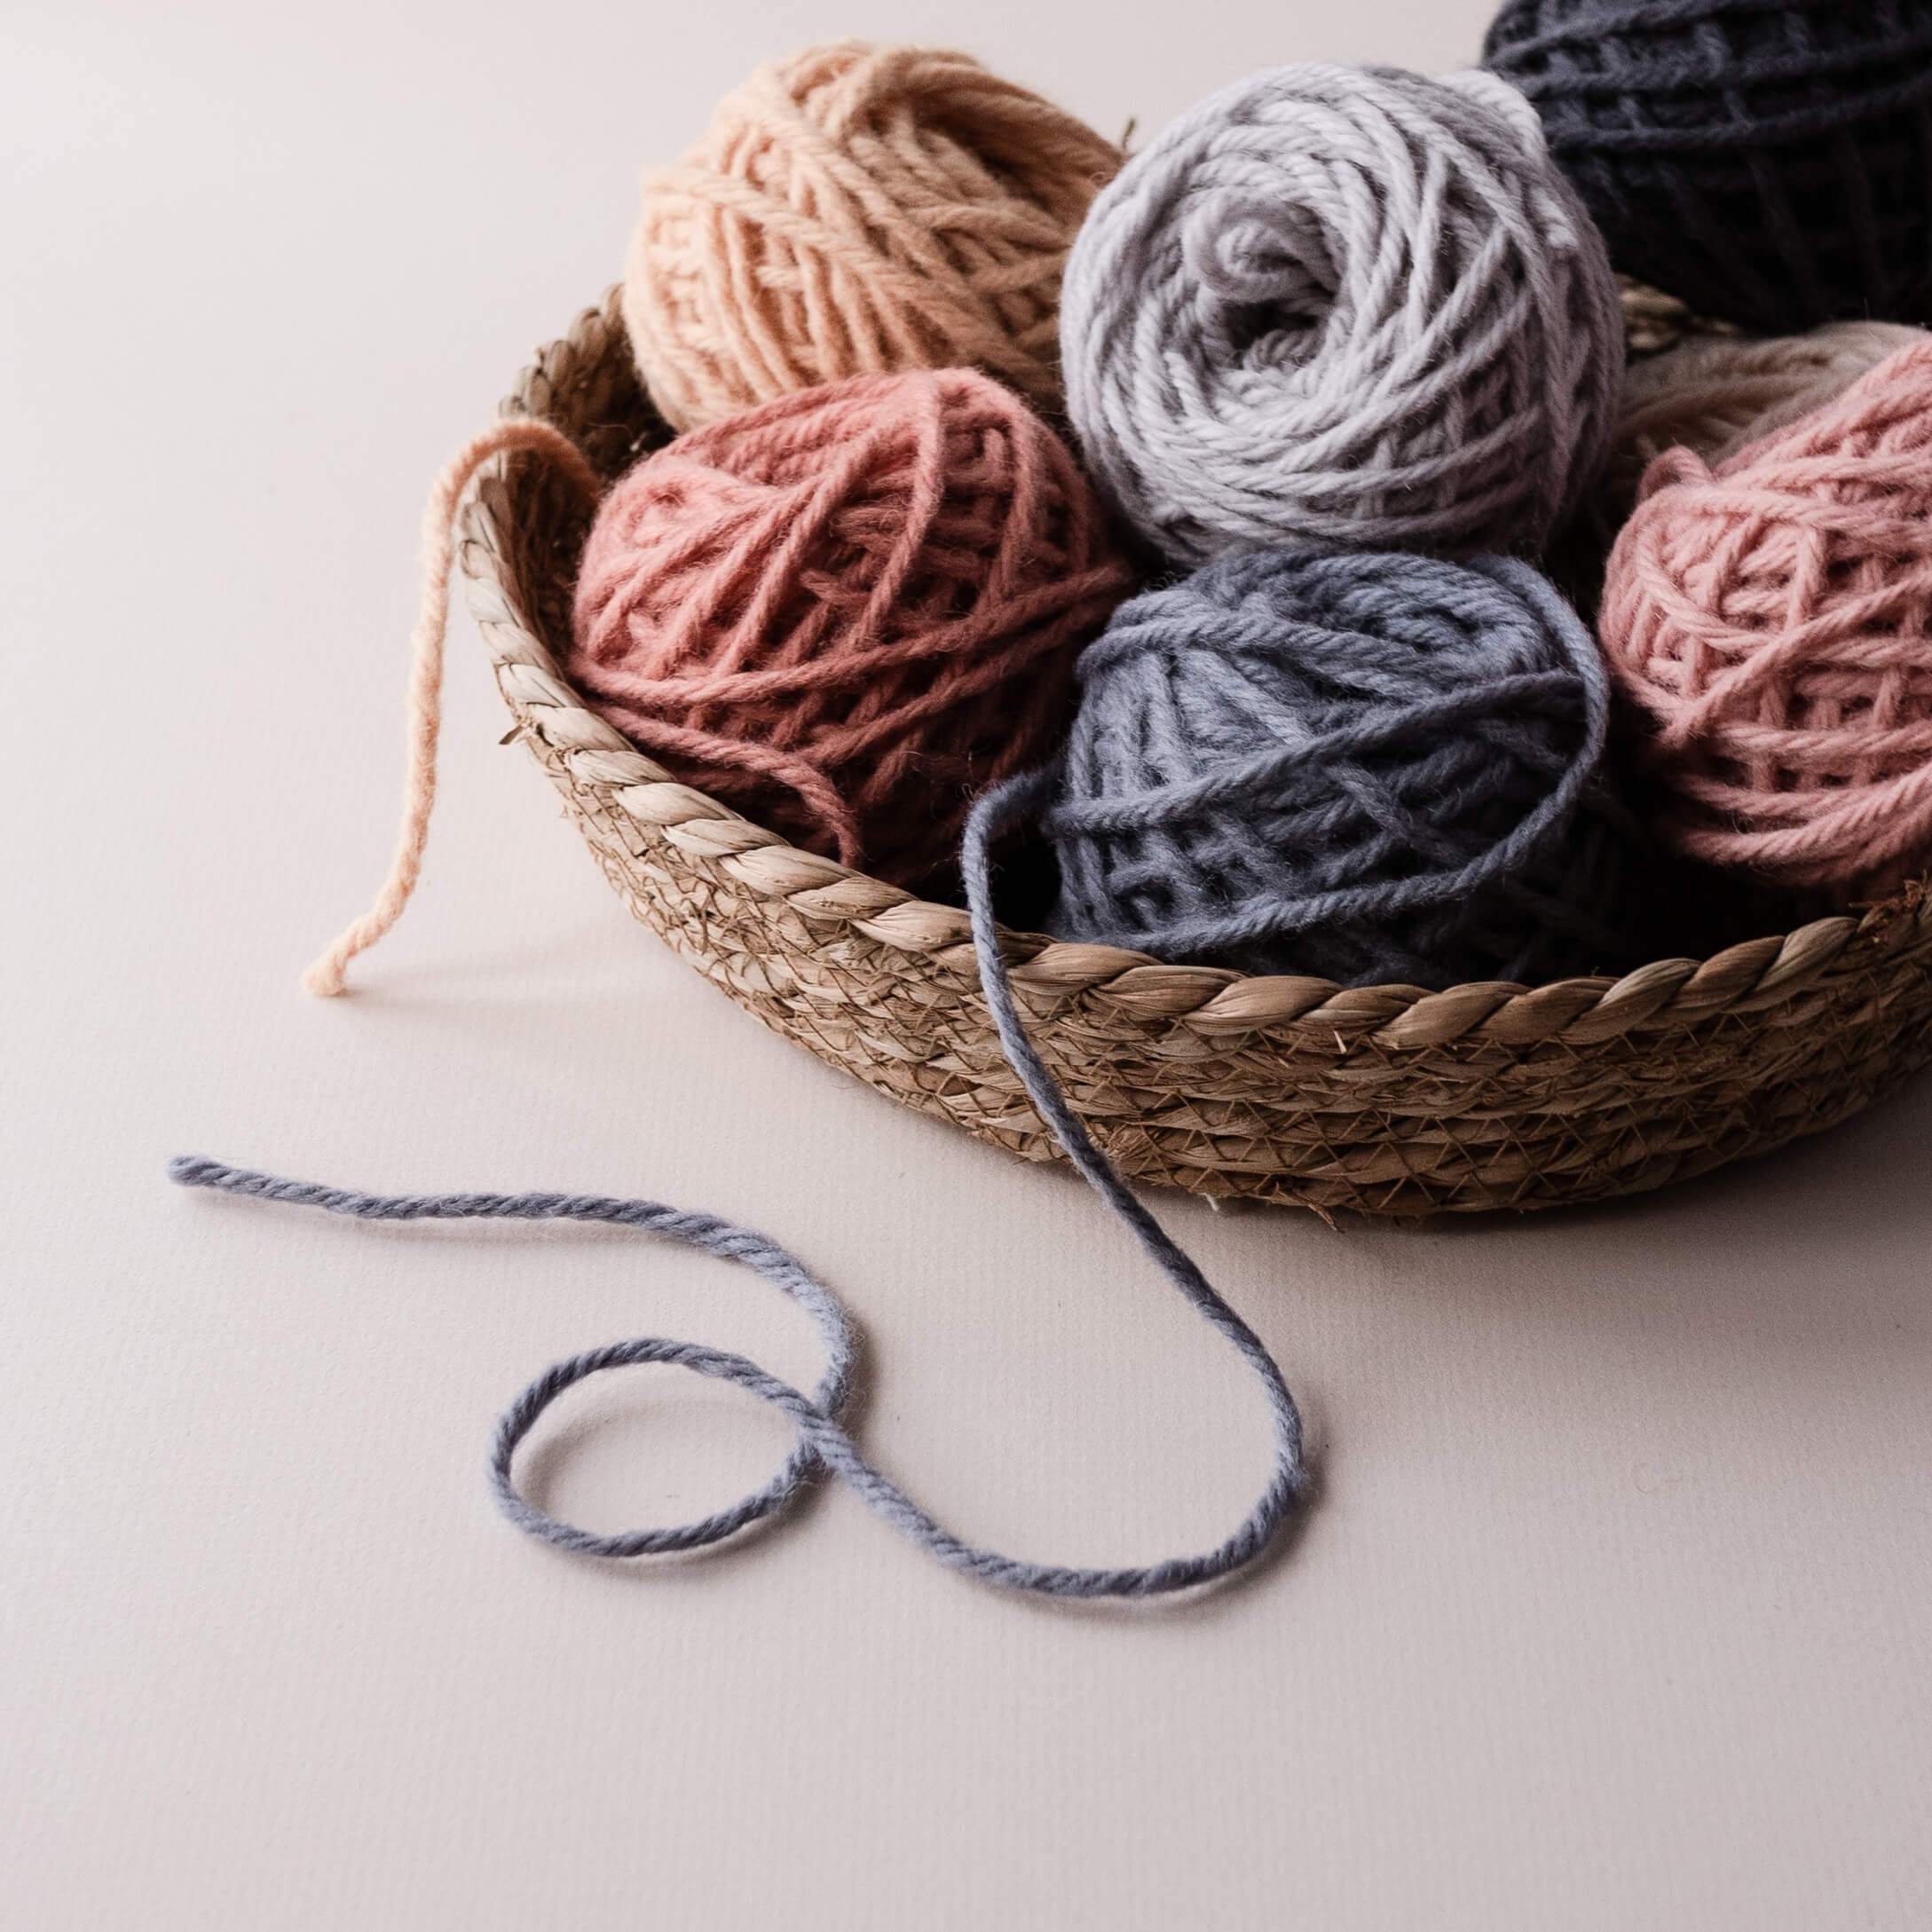 Yarn Hook Rug Latch Wool Pre Cotton Cut Bundles Knitting Crochet Carpet Kit  Supplies Pillowcases Kits Crocheting Thread 